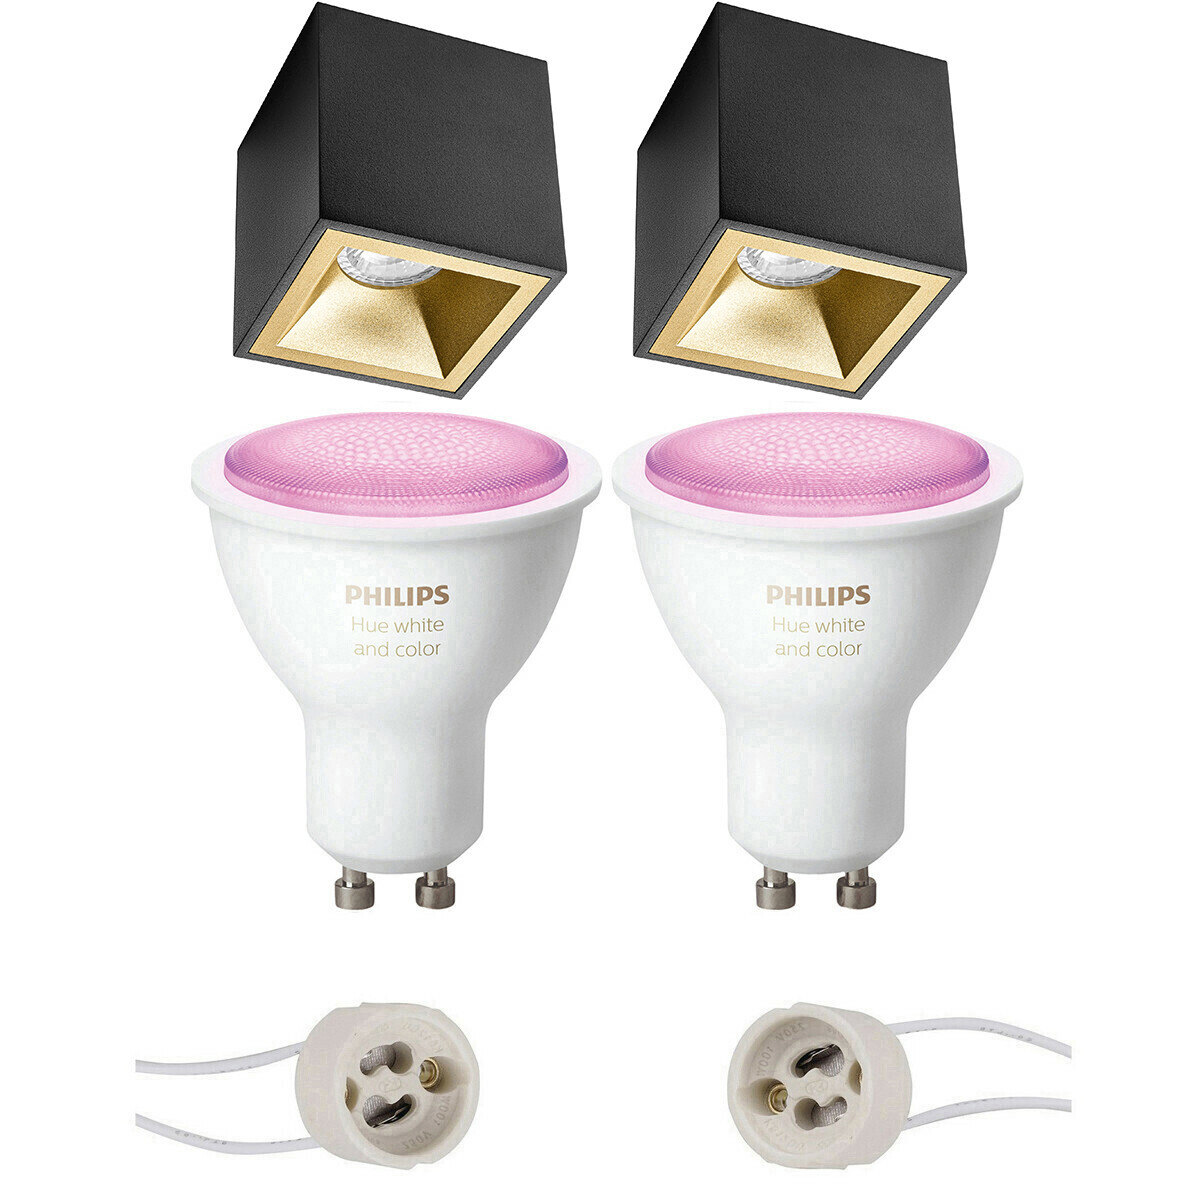 BES LED Pragmi Cliron Pro - Opbouw Vierkant - Mat Zwart/Goud - Verdiept - 90mm - Philips Hue - Opbouwspot Set GU10 - White and Color Ambiance - Bluetooth